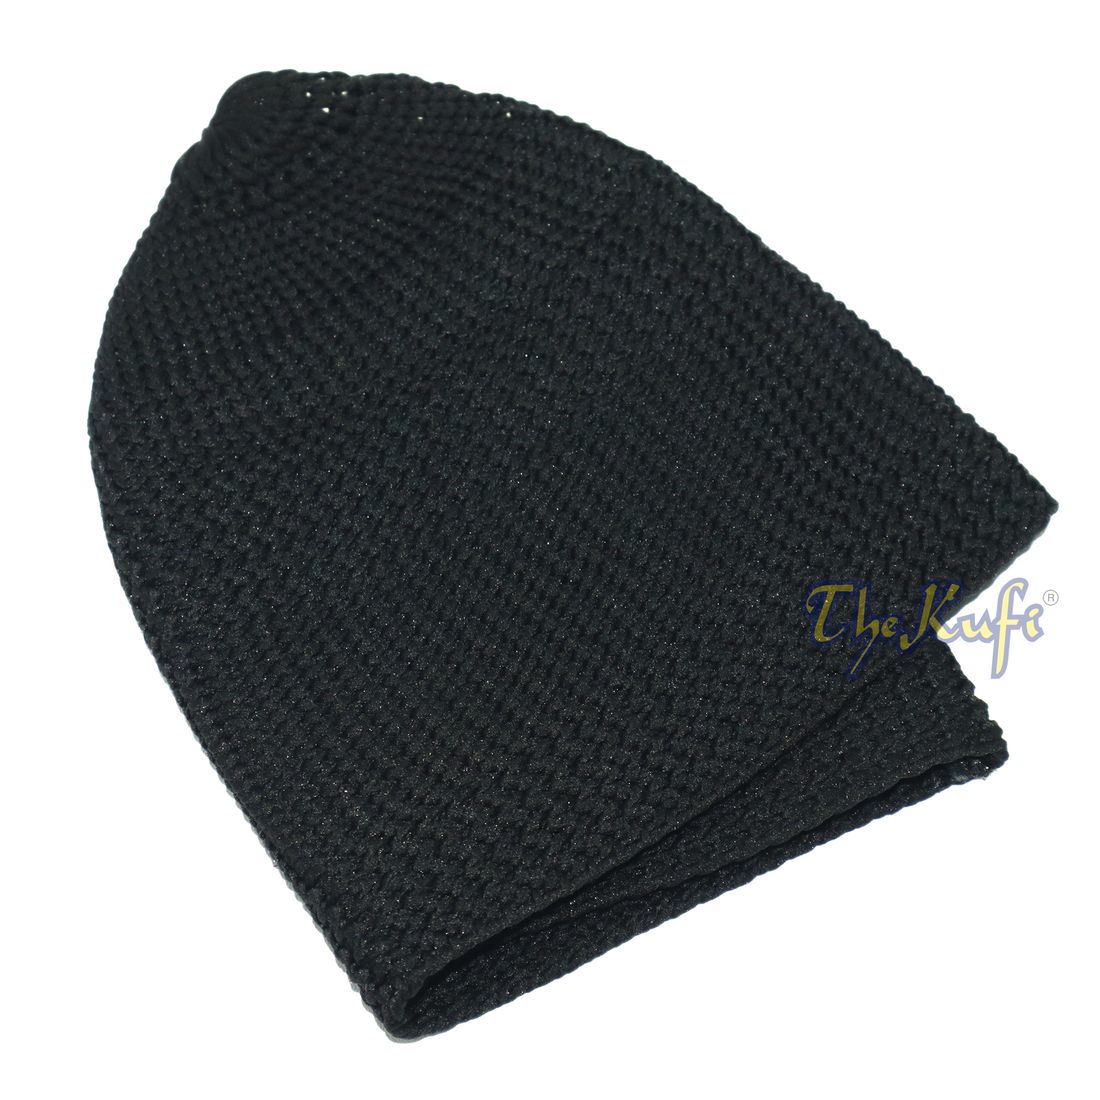 Black Skull Cap 100% Nylon Head Cover Kufi Knitted Hat Vertical Lines Taqiya XSM to 4X